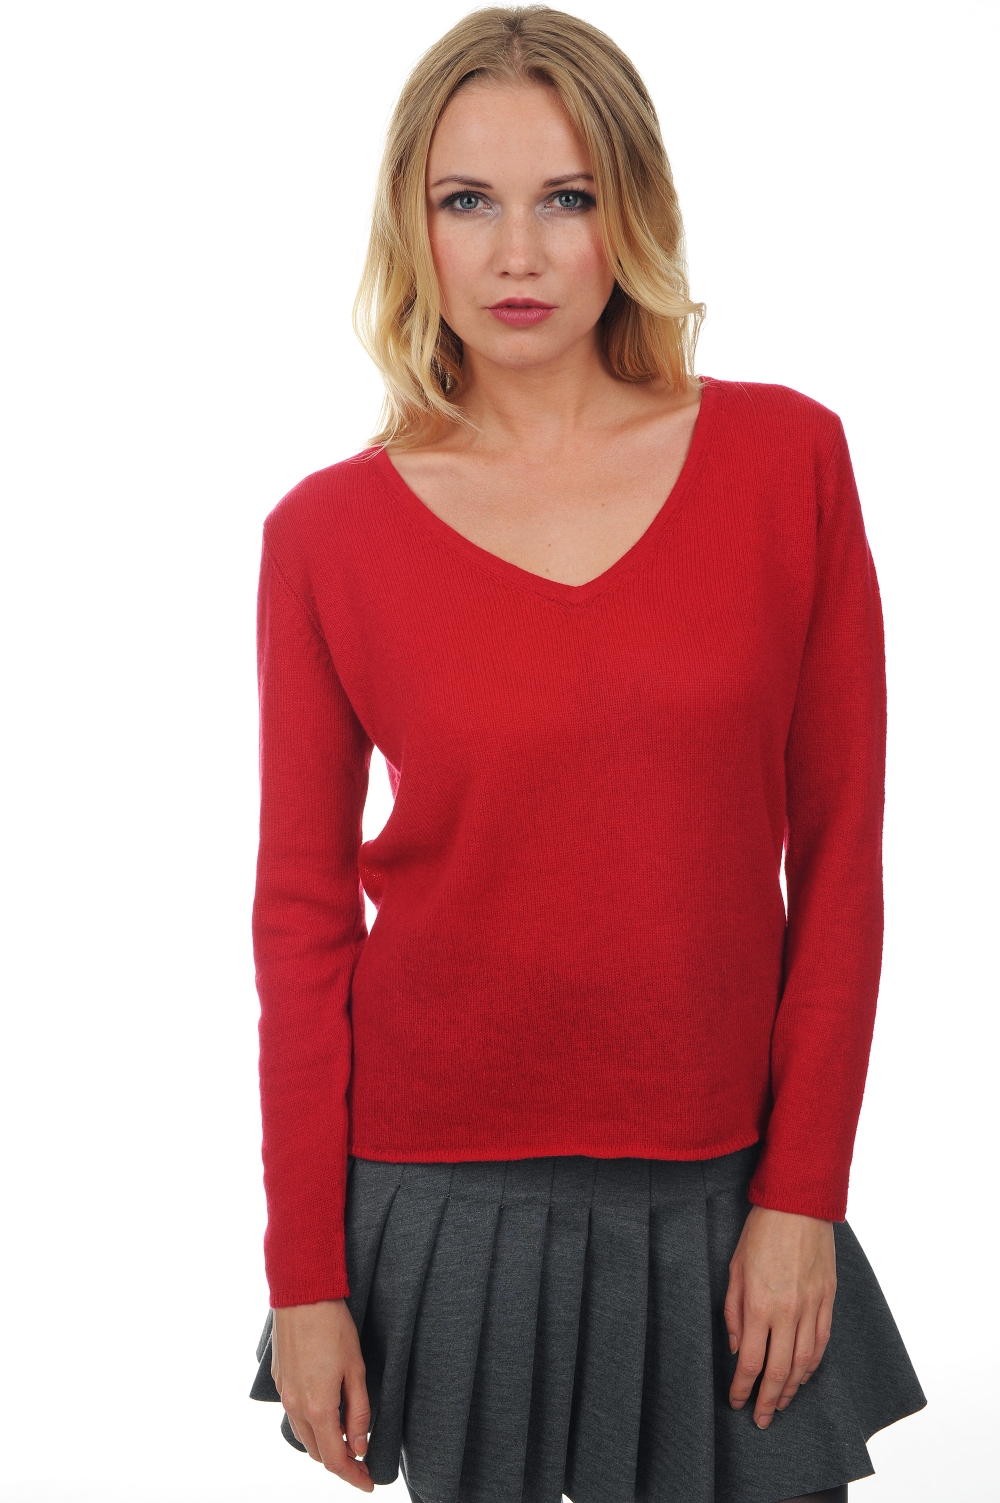 Cashmere cashmere donna essenziali low cost flavie rosso rubino 3xl